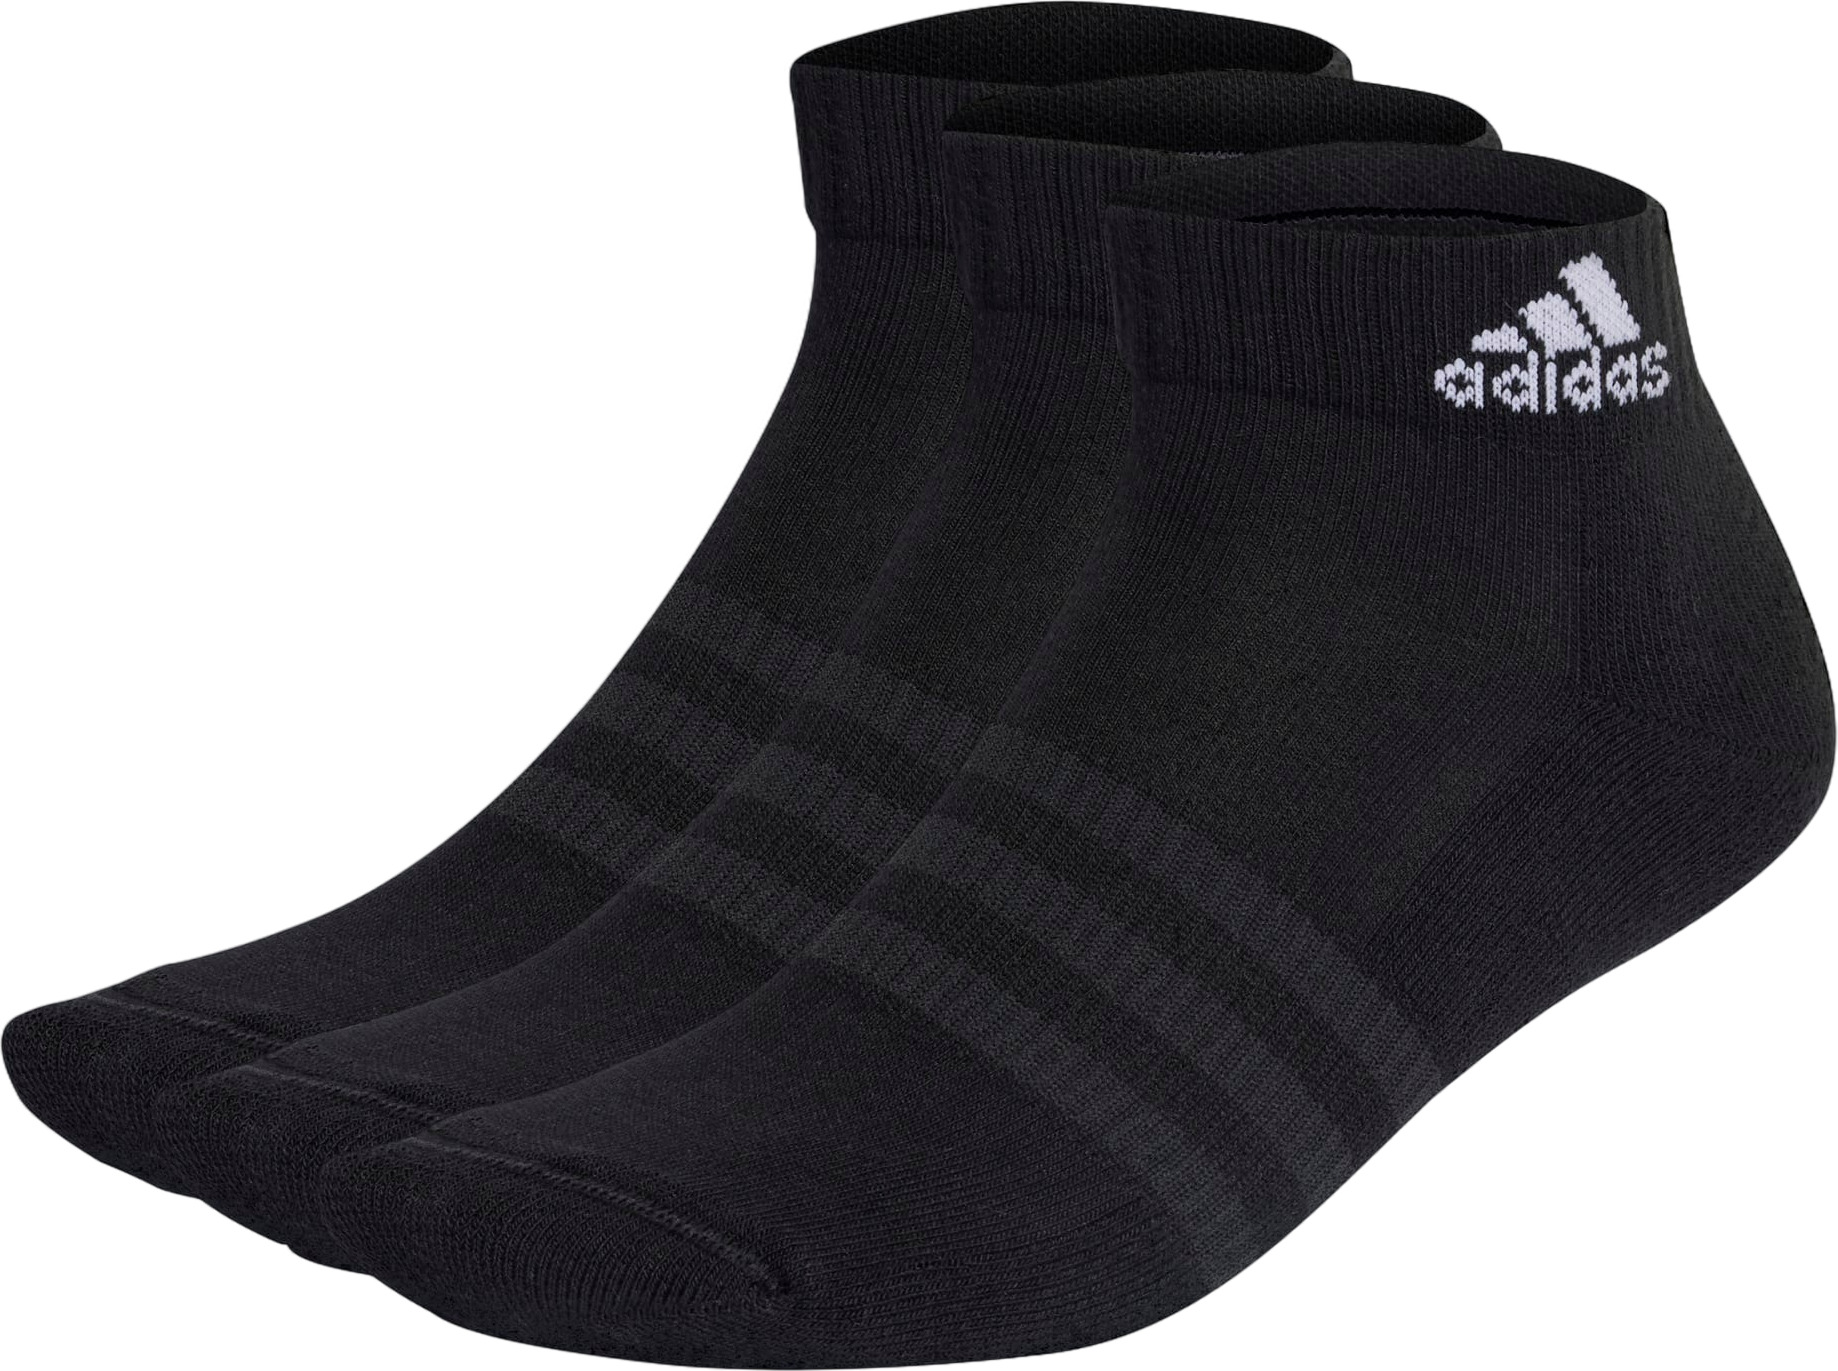 Комплект носков мужских Adidas Cushioned Sportswear Ankle Socks 3 Pairs черных M